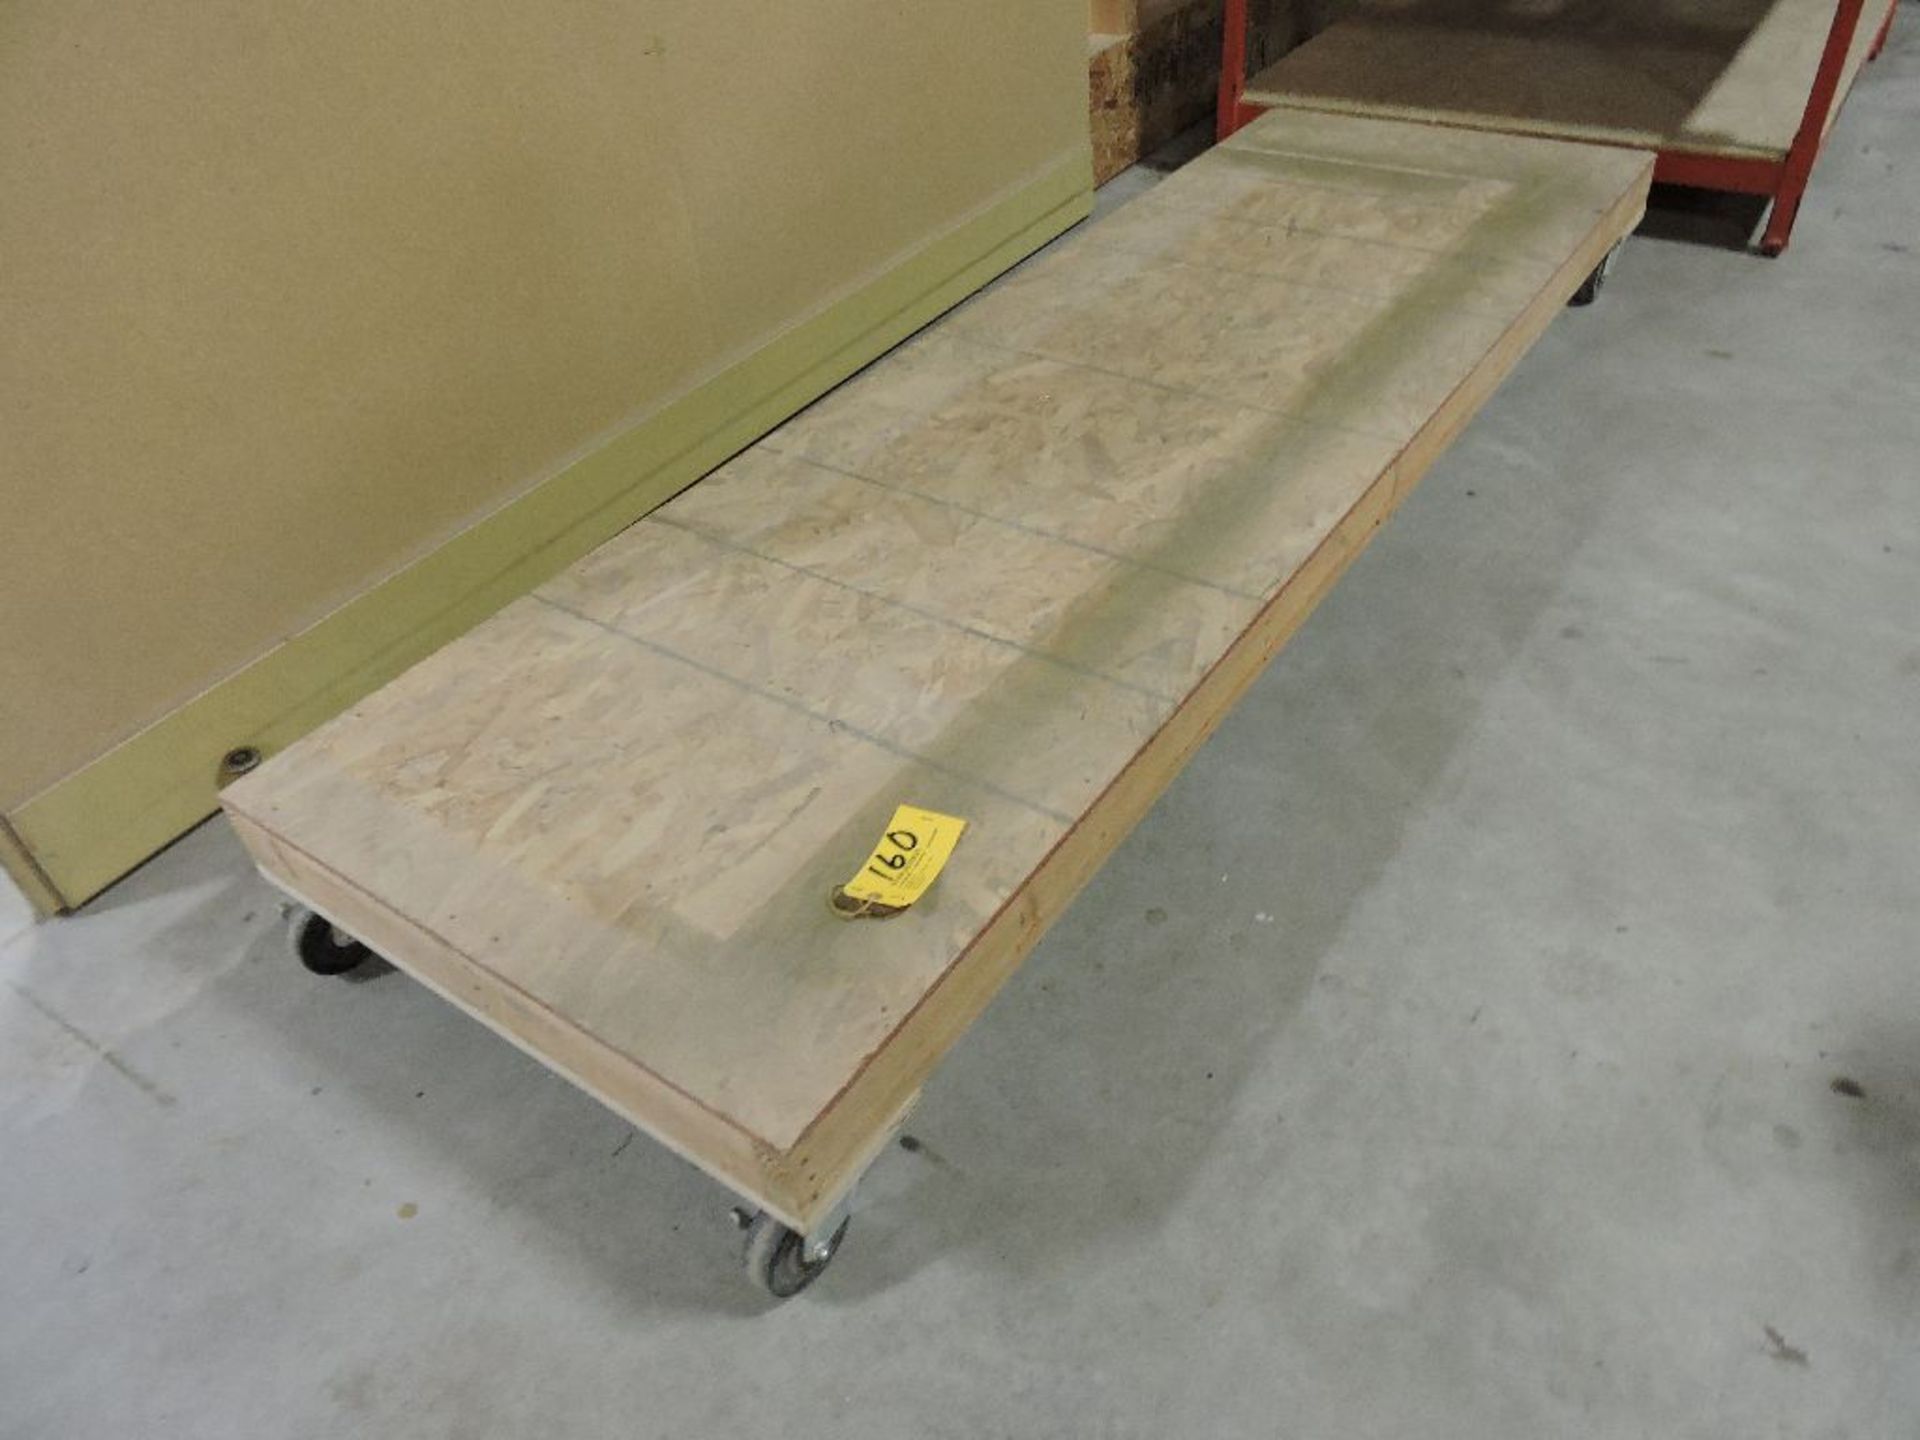 Wooden rolling platform, 8'x 30".